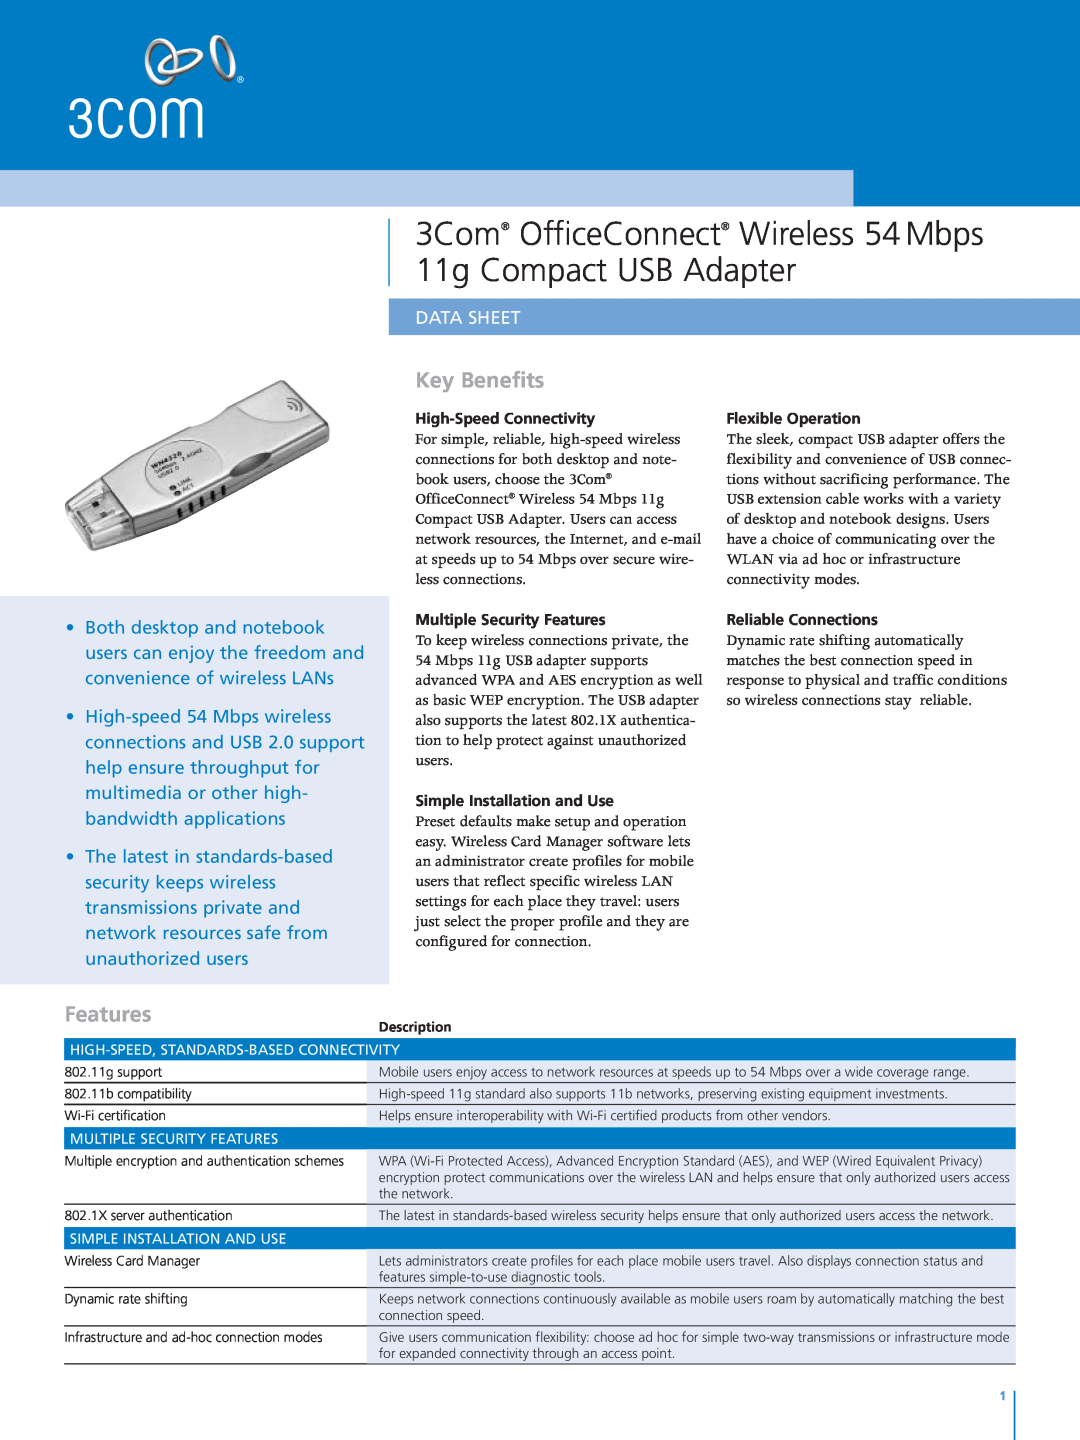 3Com Wireless Compact USB Adapter manual Key Benefits, Features, Data Sheet 